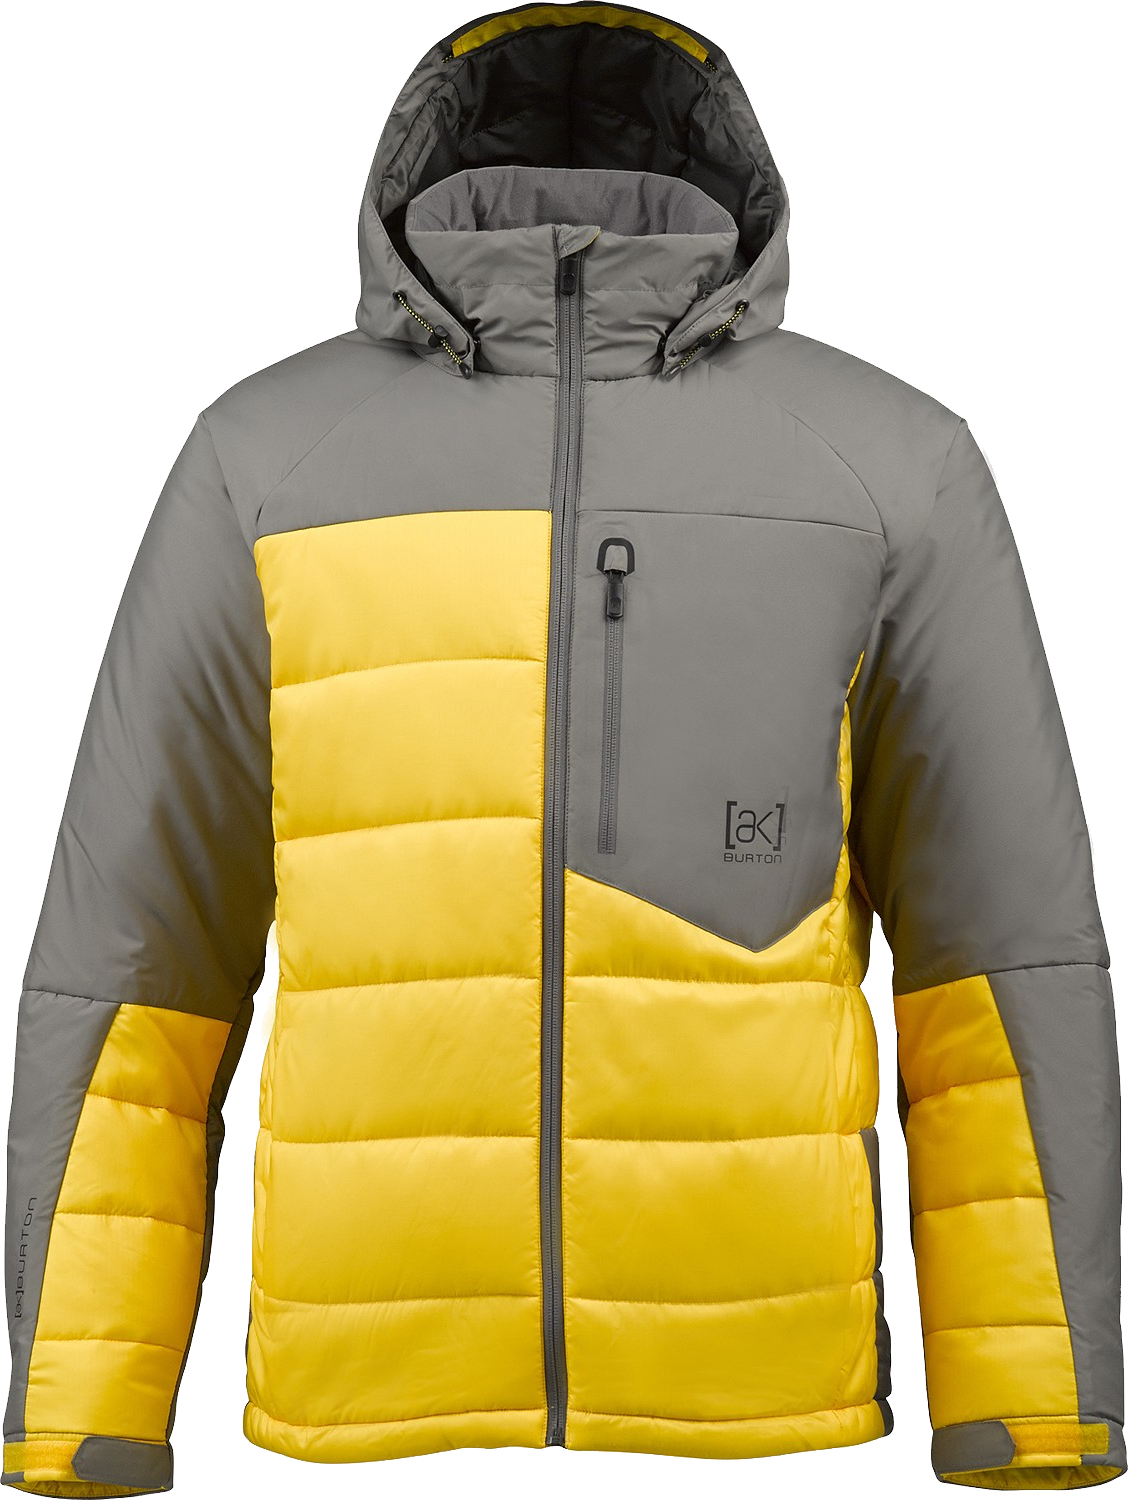 Yellow Jacket PNG Image